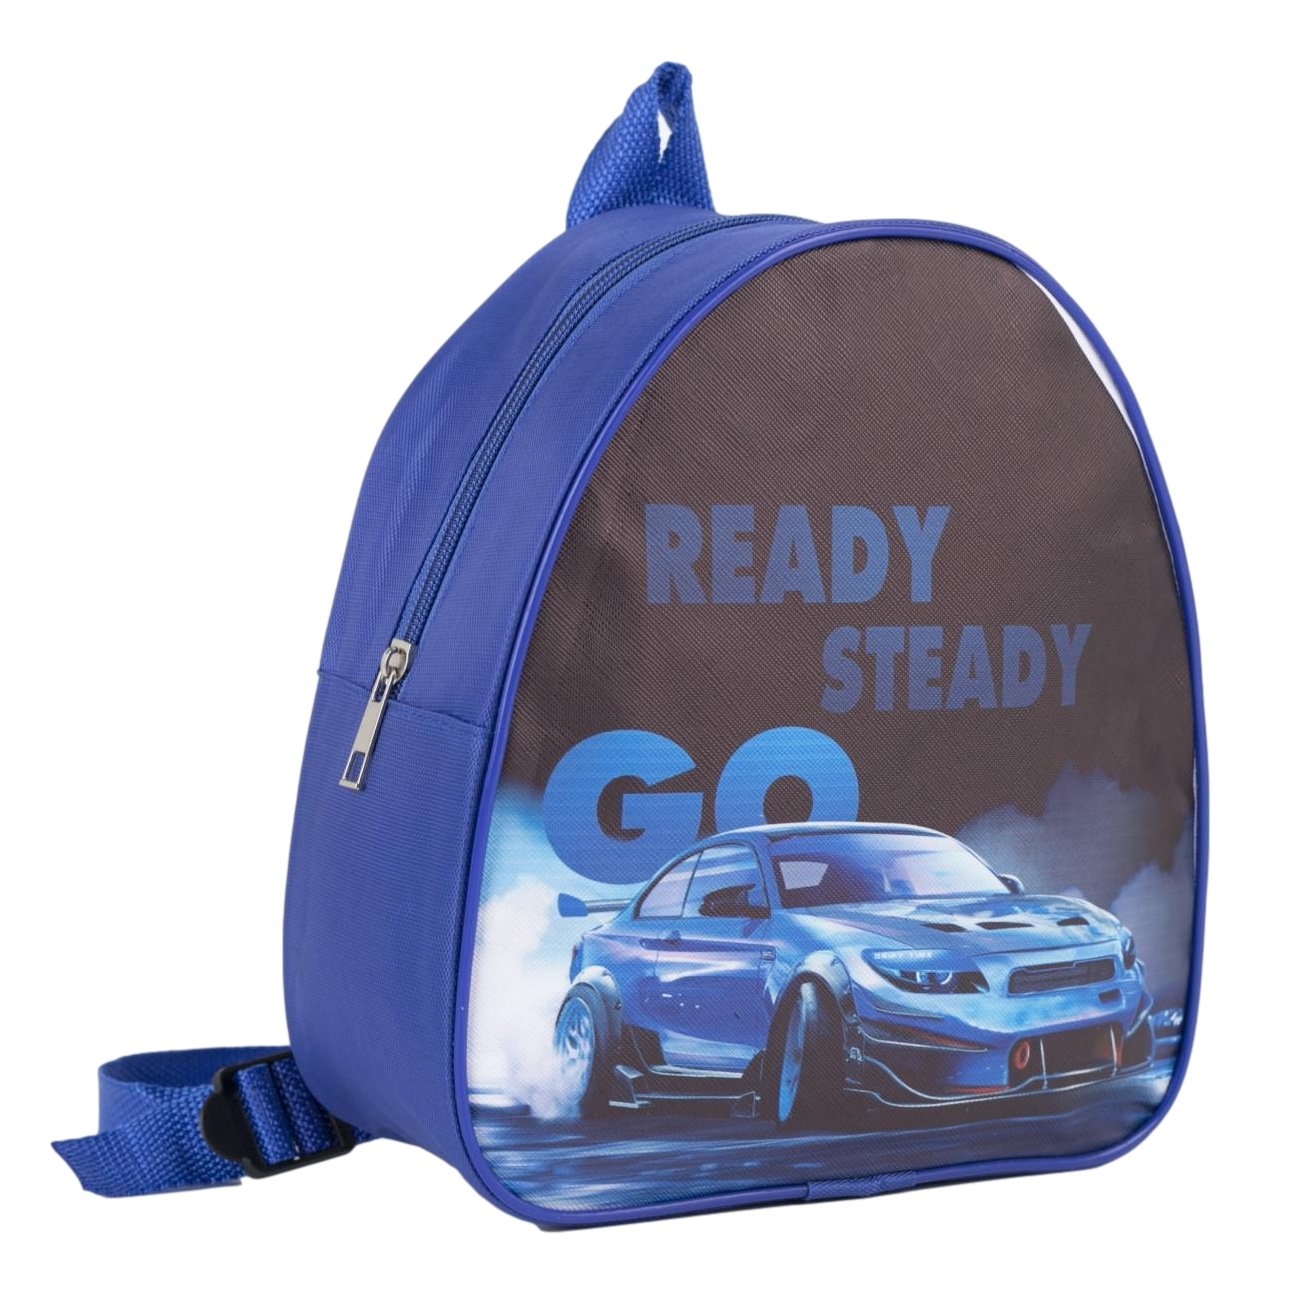 Рюкзак детский "Ready steady go", 23*20,5 см 5215836